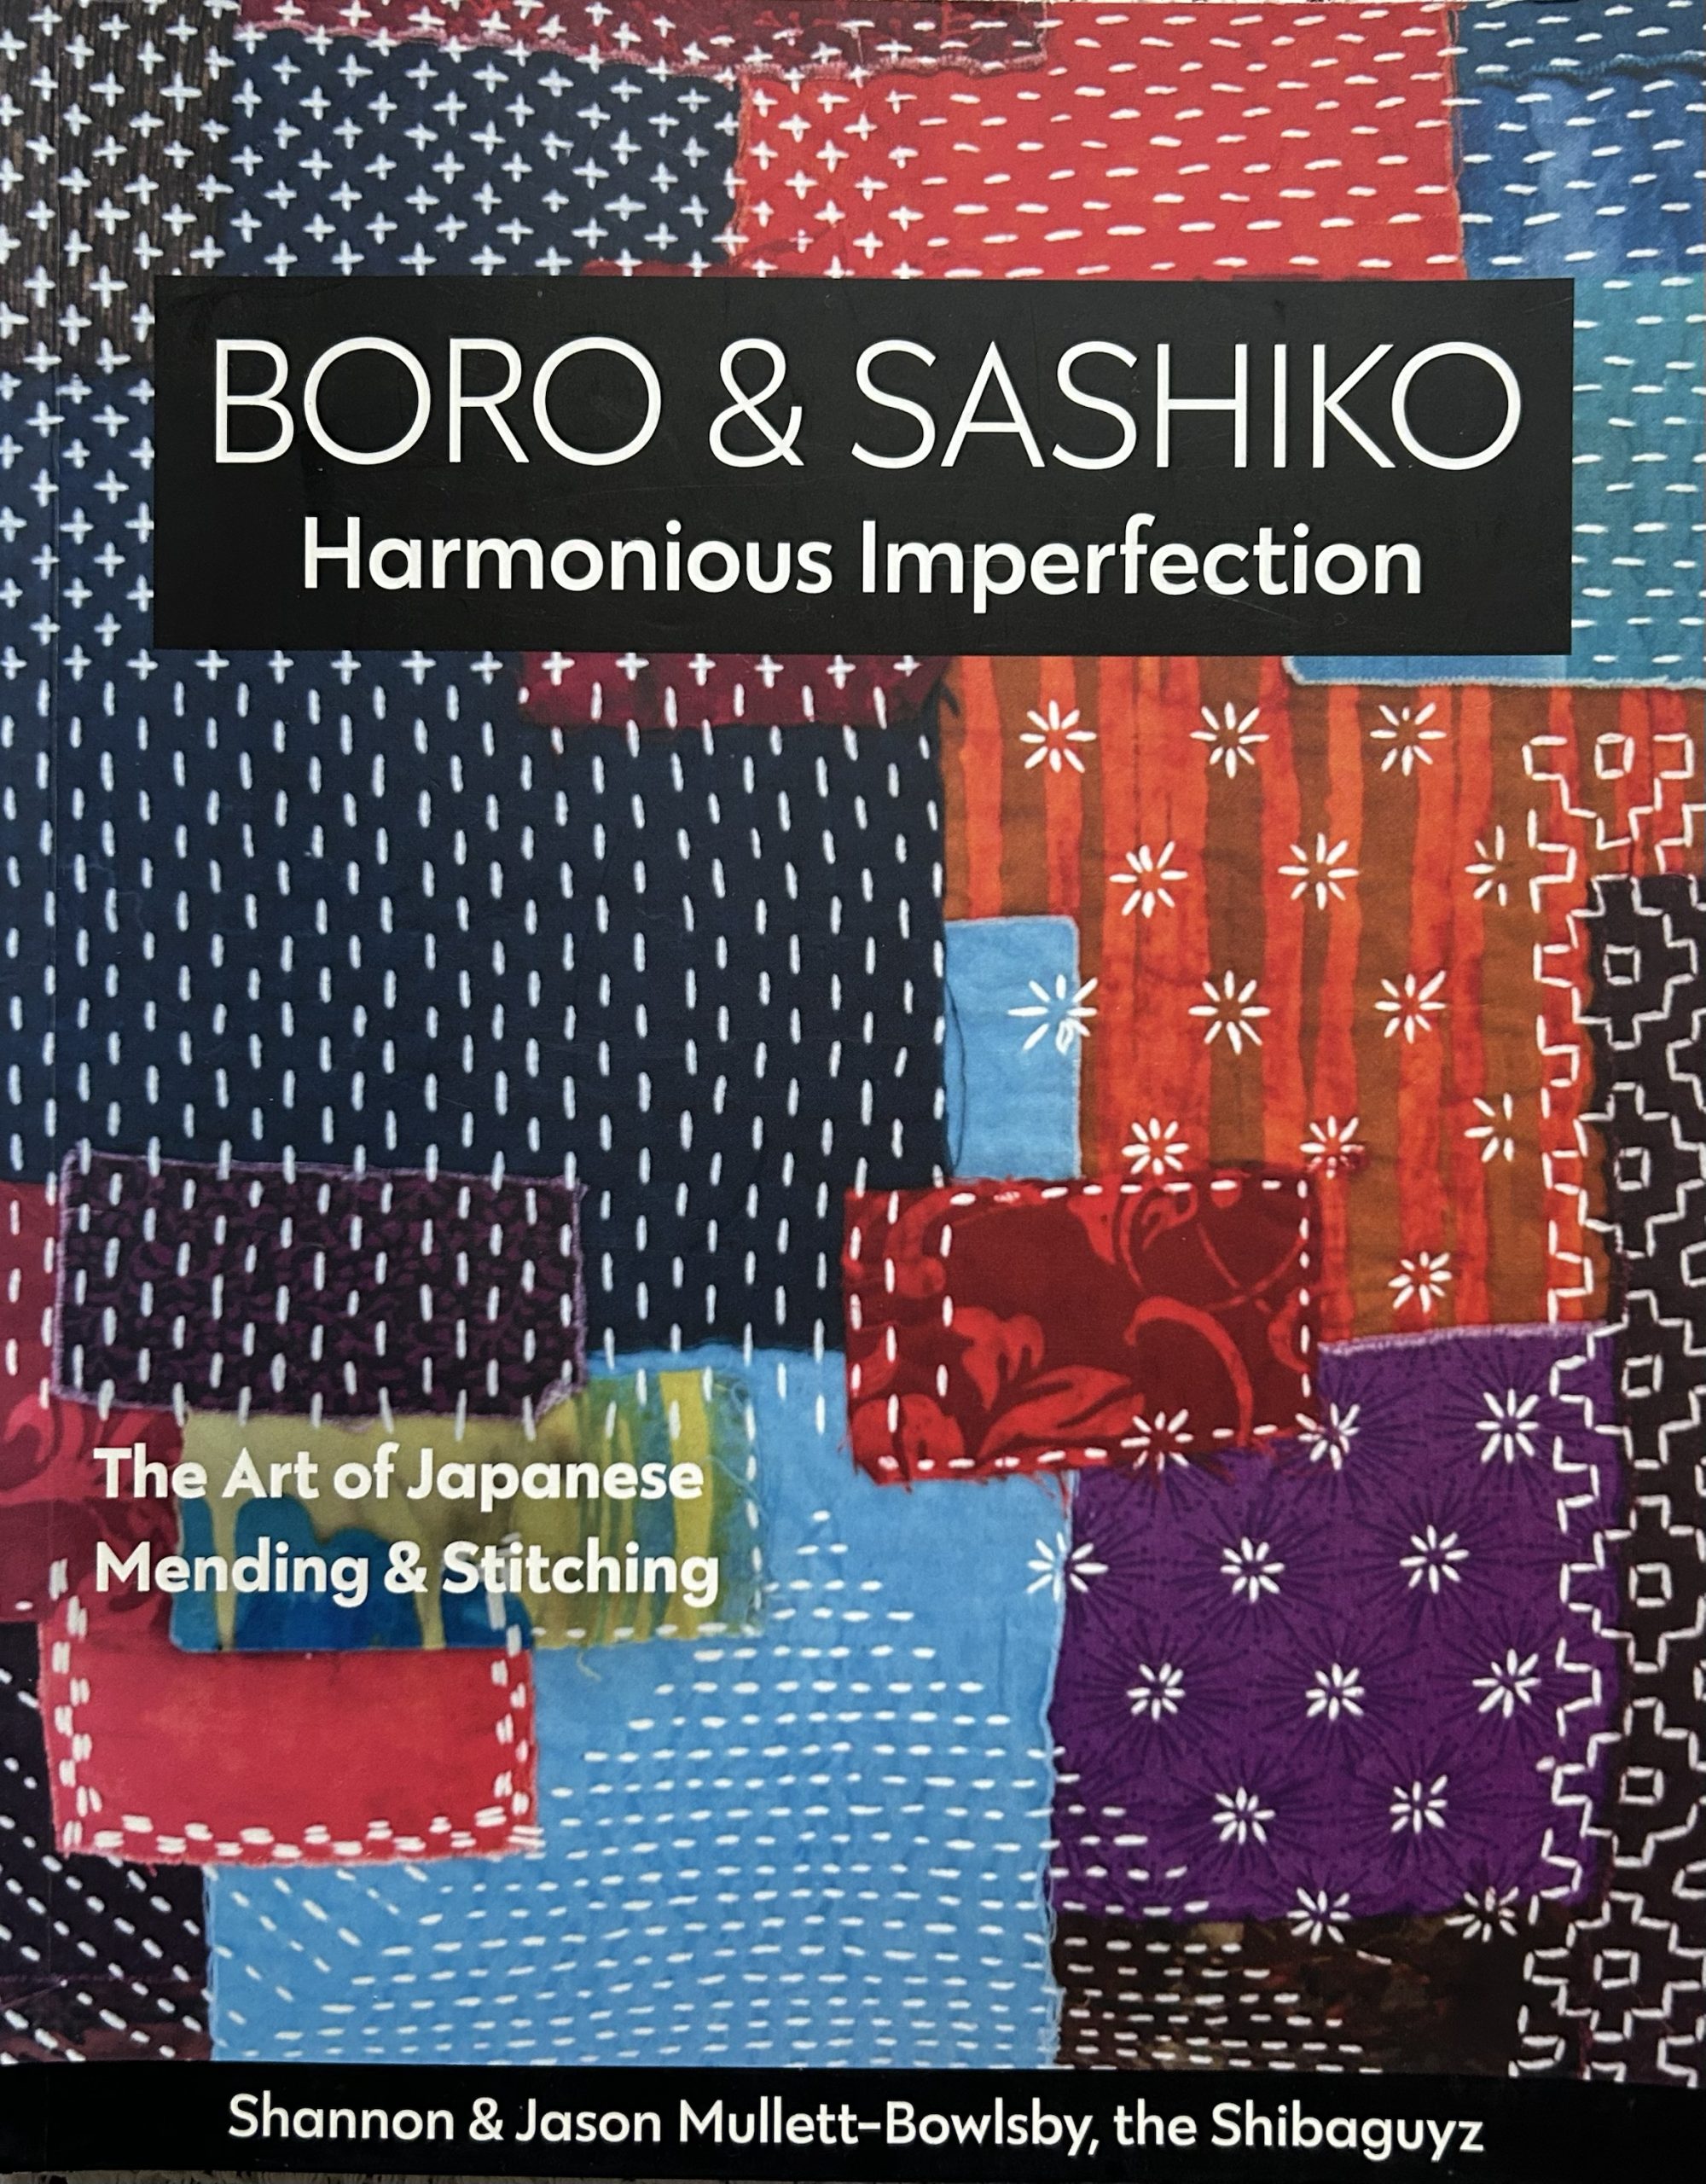 Boro & Sashiko: Harmonious Imperfection: The Art of Japanese Mending & Stitching by Shannon and Jason Mullett-Bowlsby